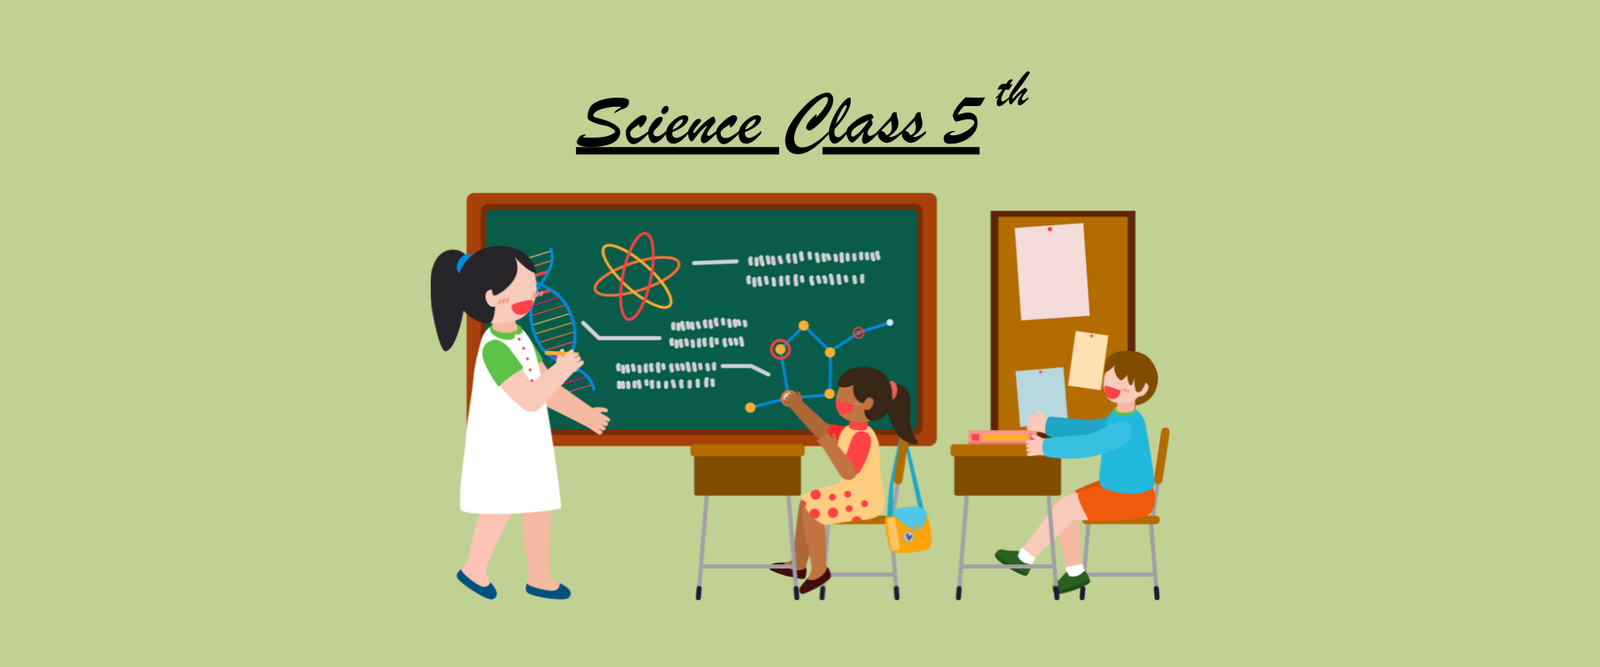 Science Class 5